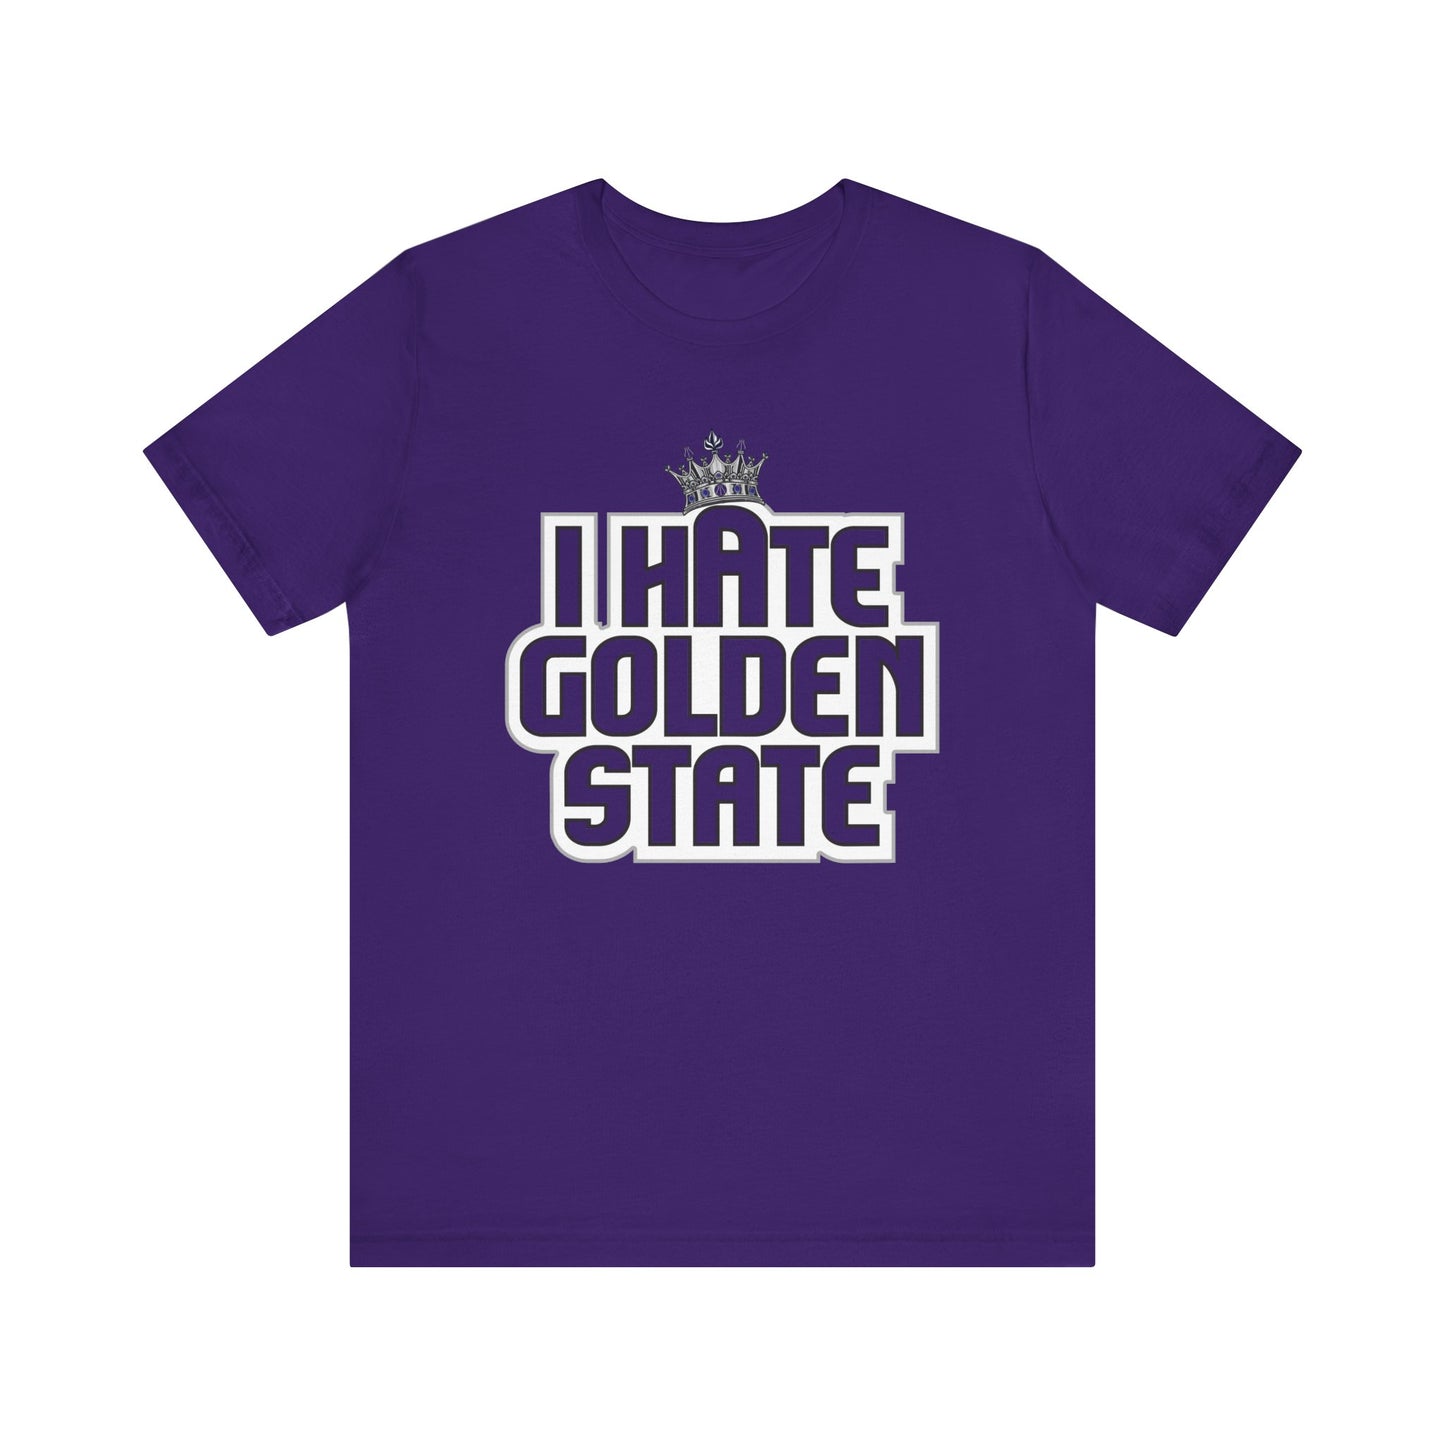 I Hate Golden State (for Sacramento fans) - Unisex Jersey Short Sleeve Tee